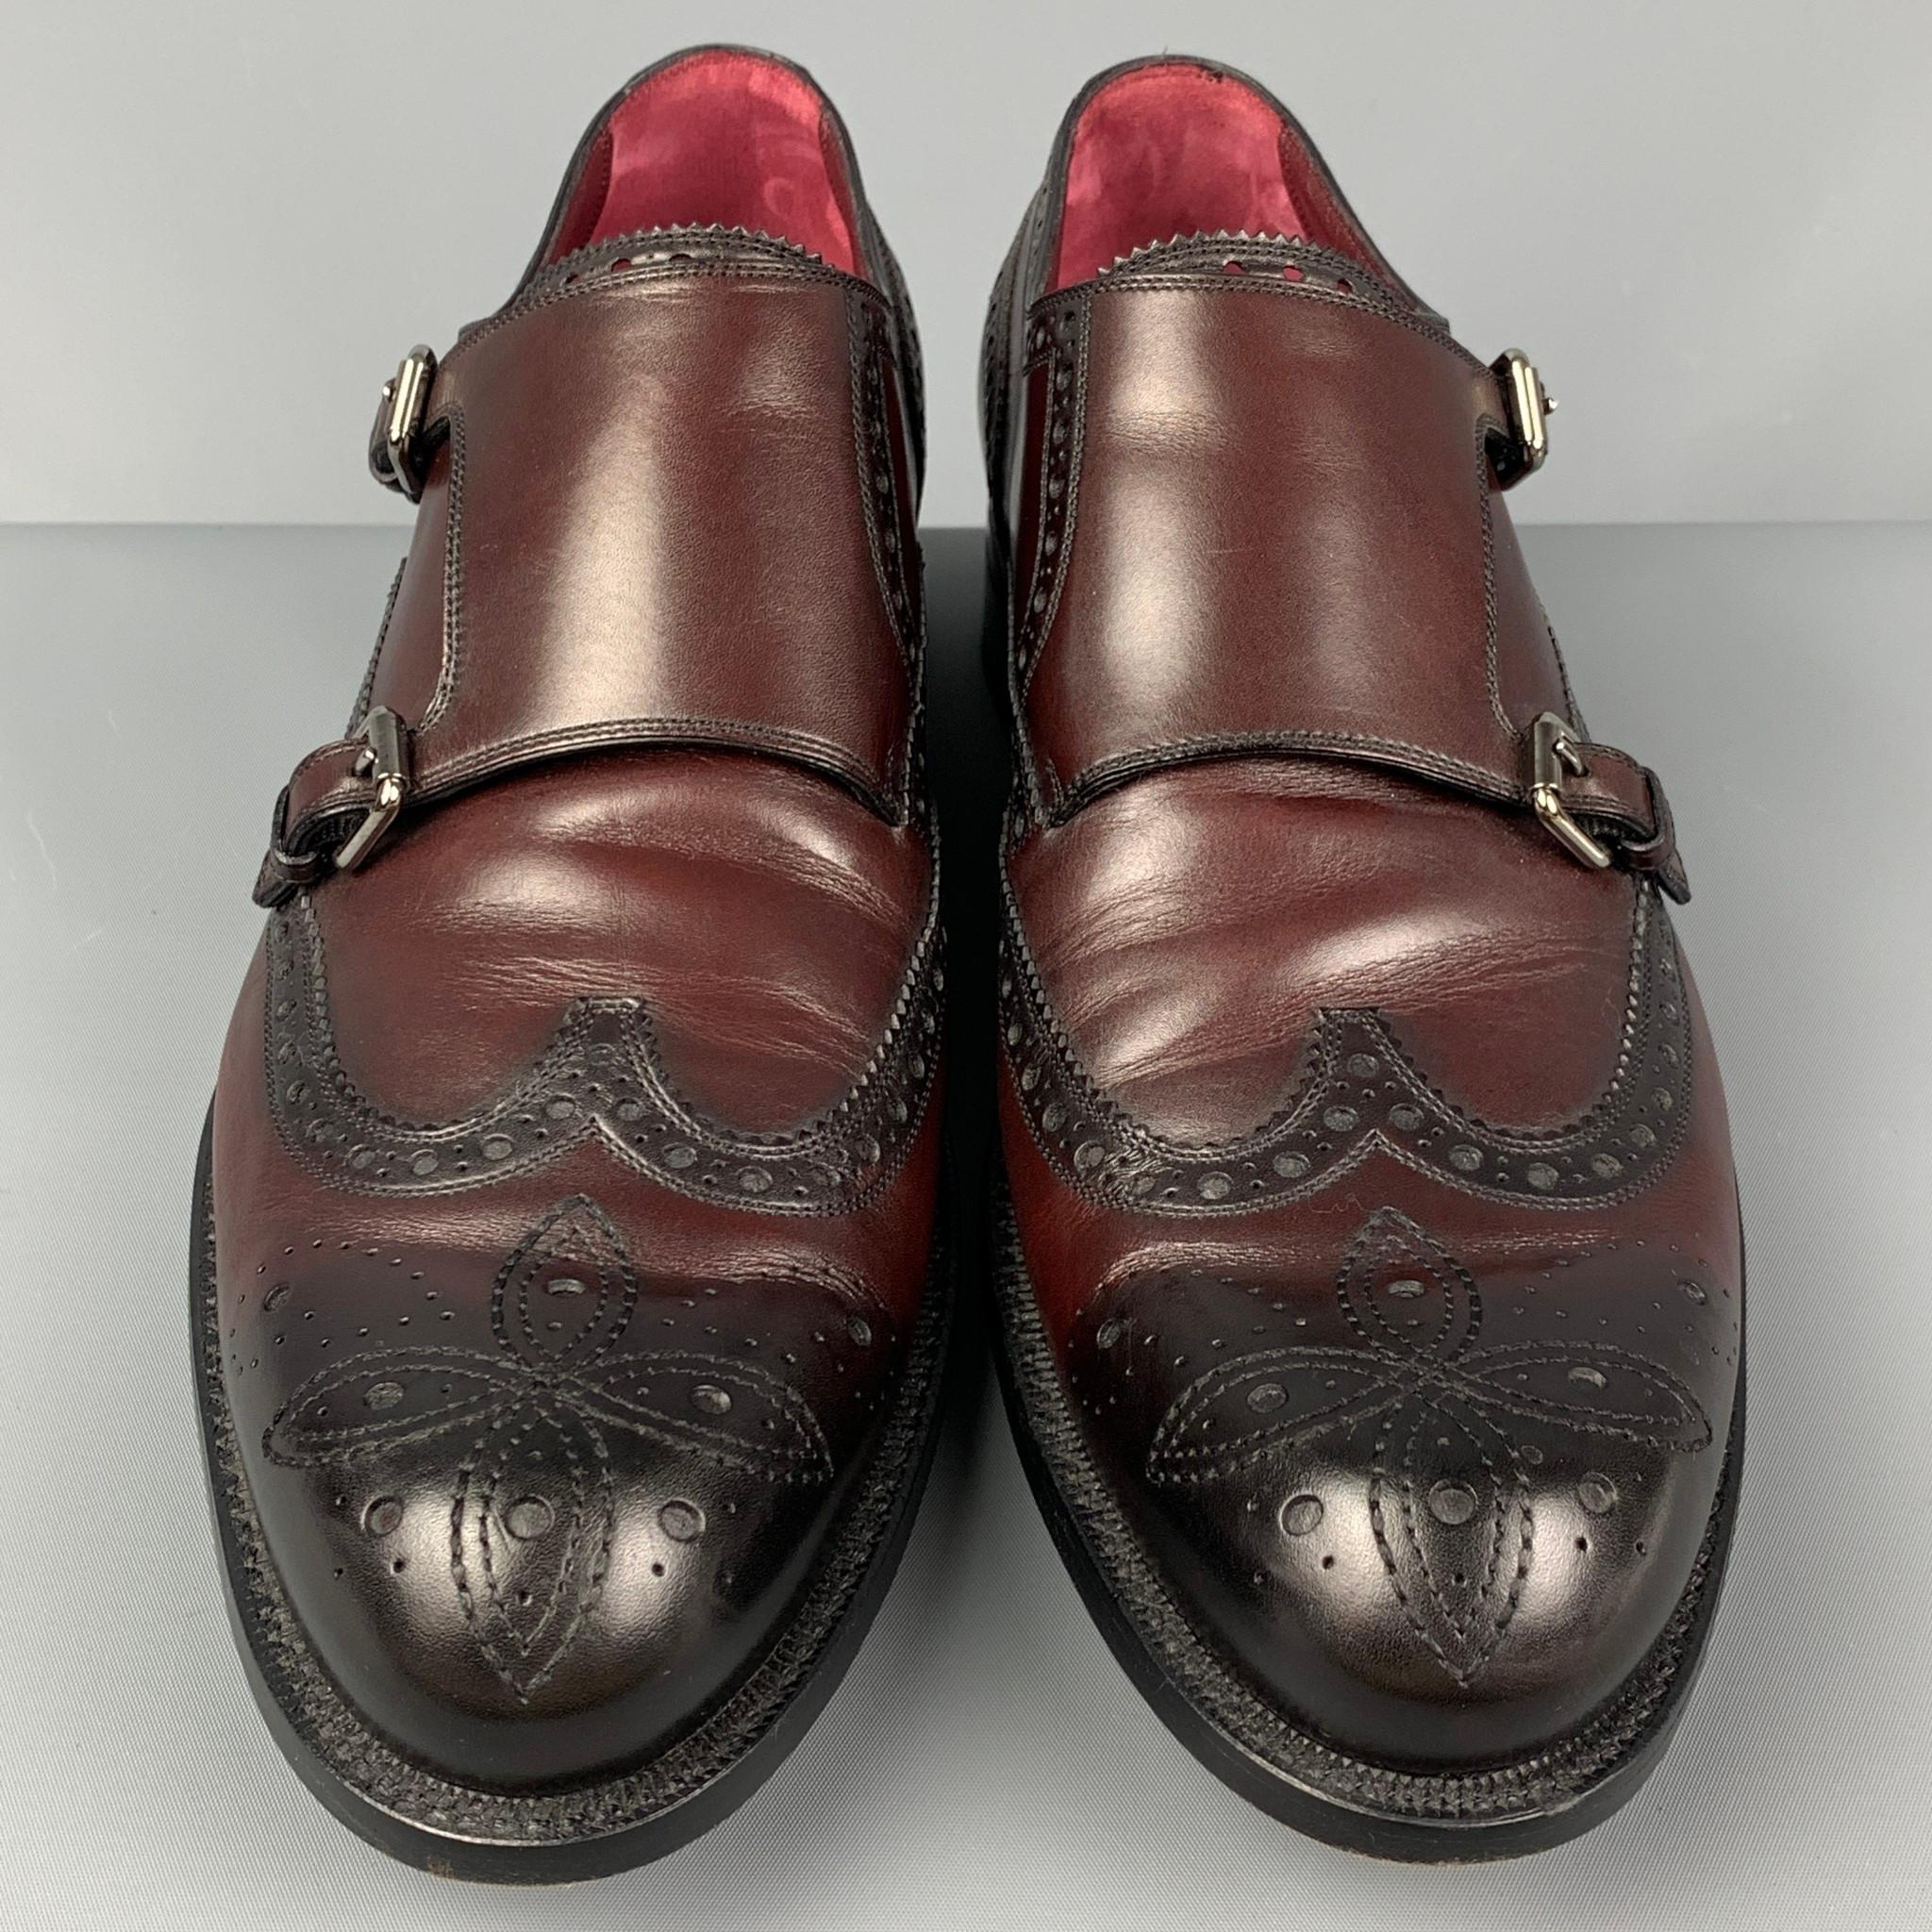 burgundy church shoes